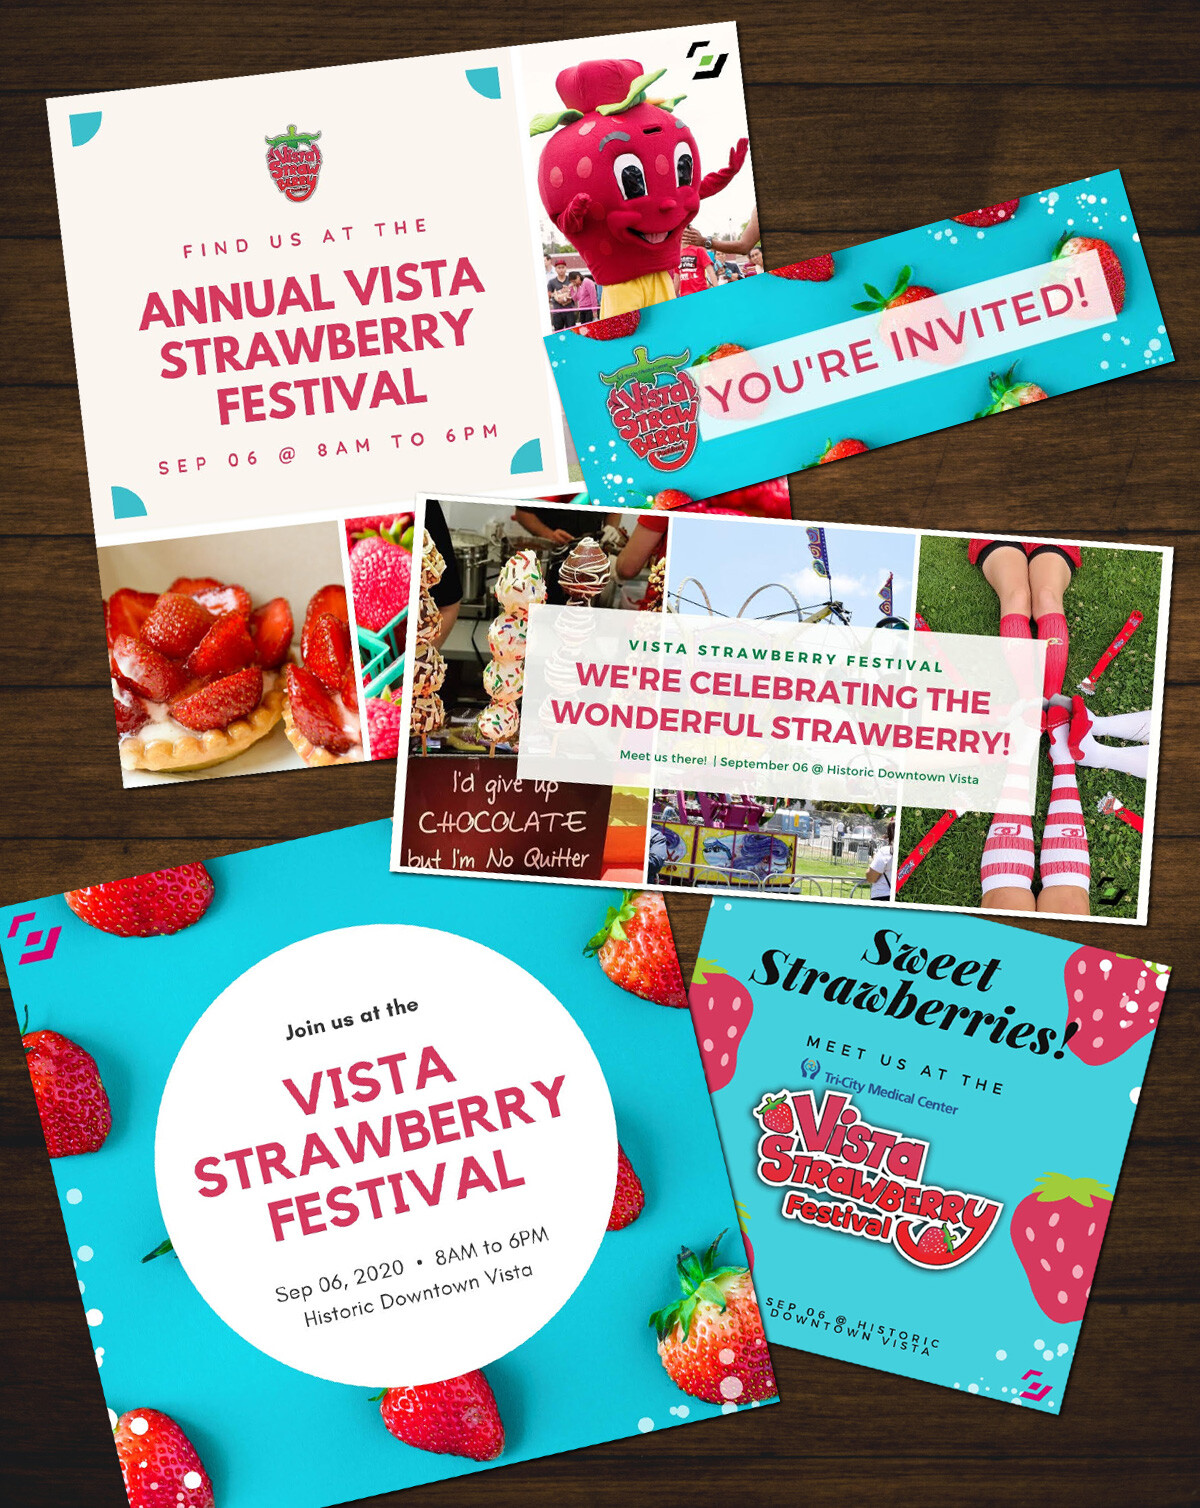 Vista Strawberry Festival logo redesigned by Puzzle Pieces Marketing